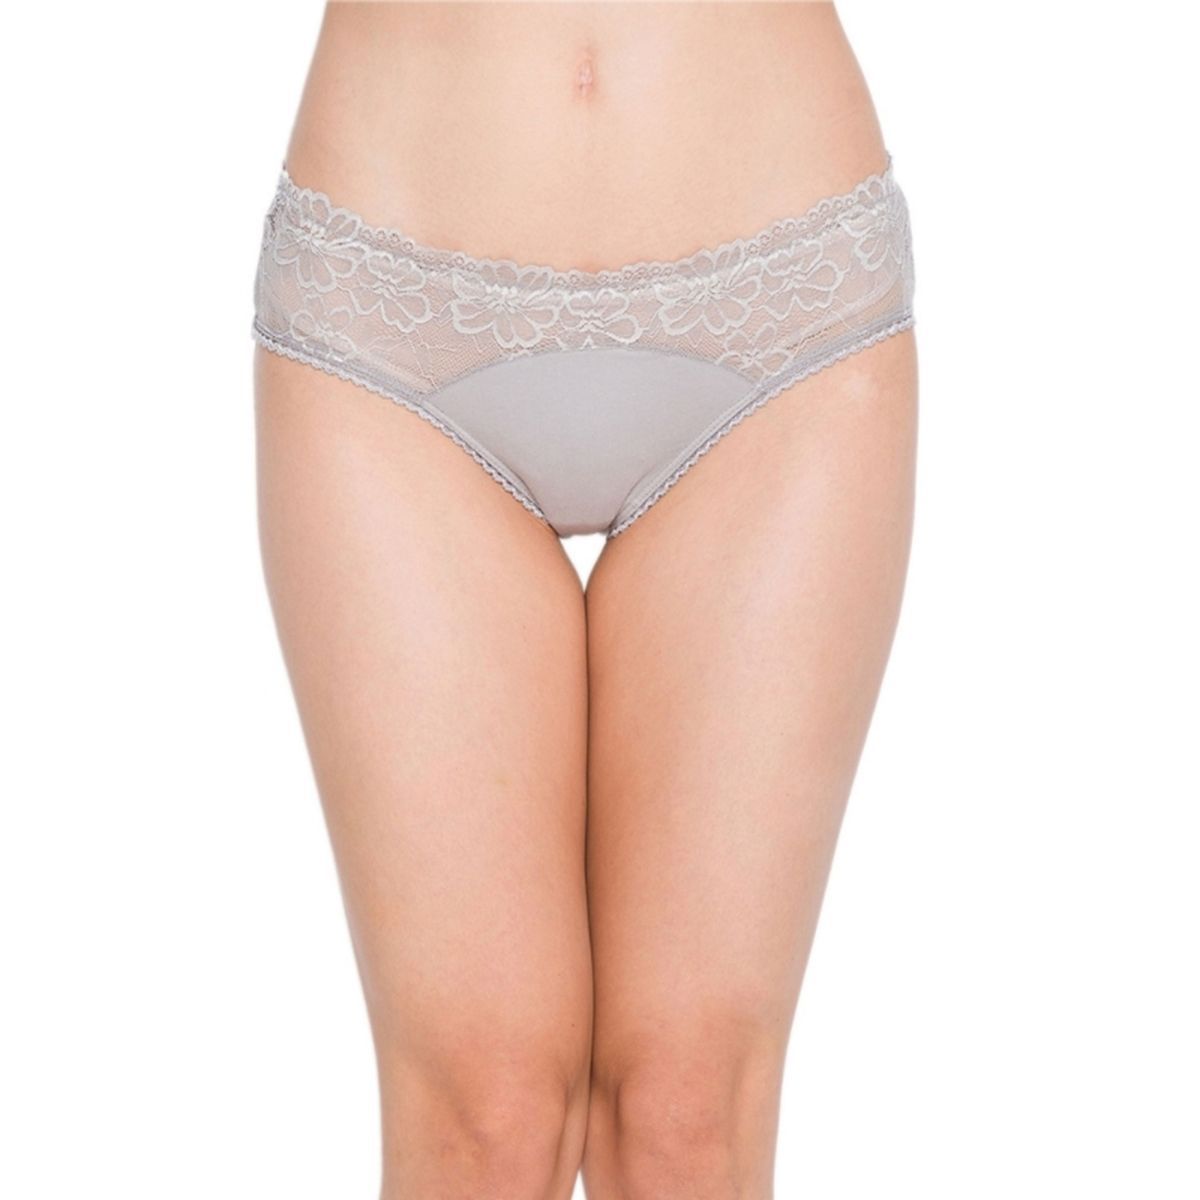 Buy Candyskin Women's Cotton Cheeky Panty - Grey online